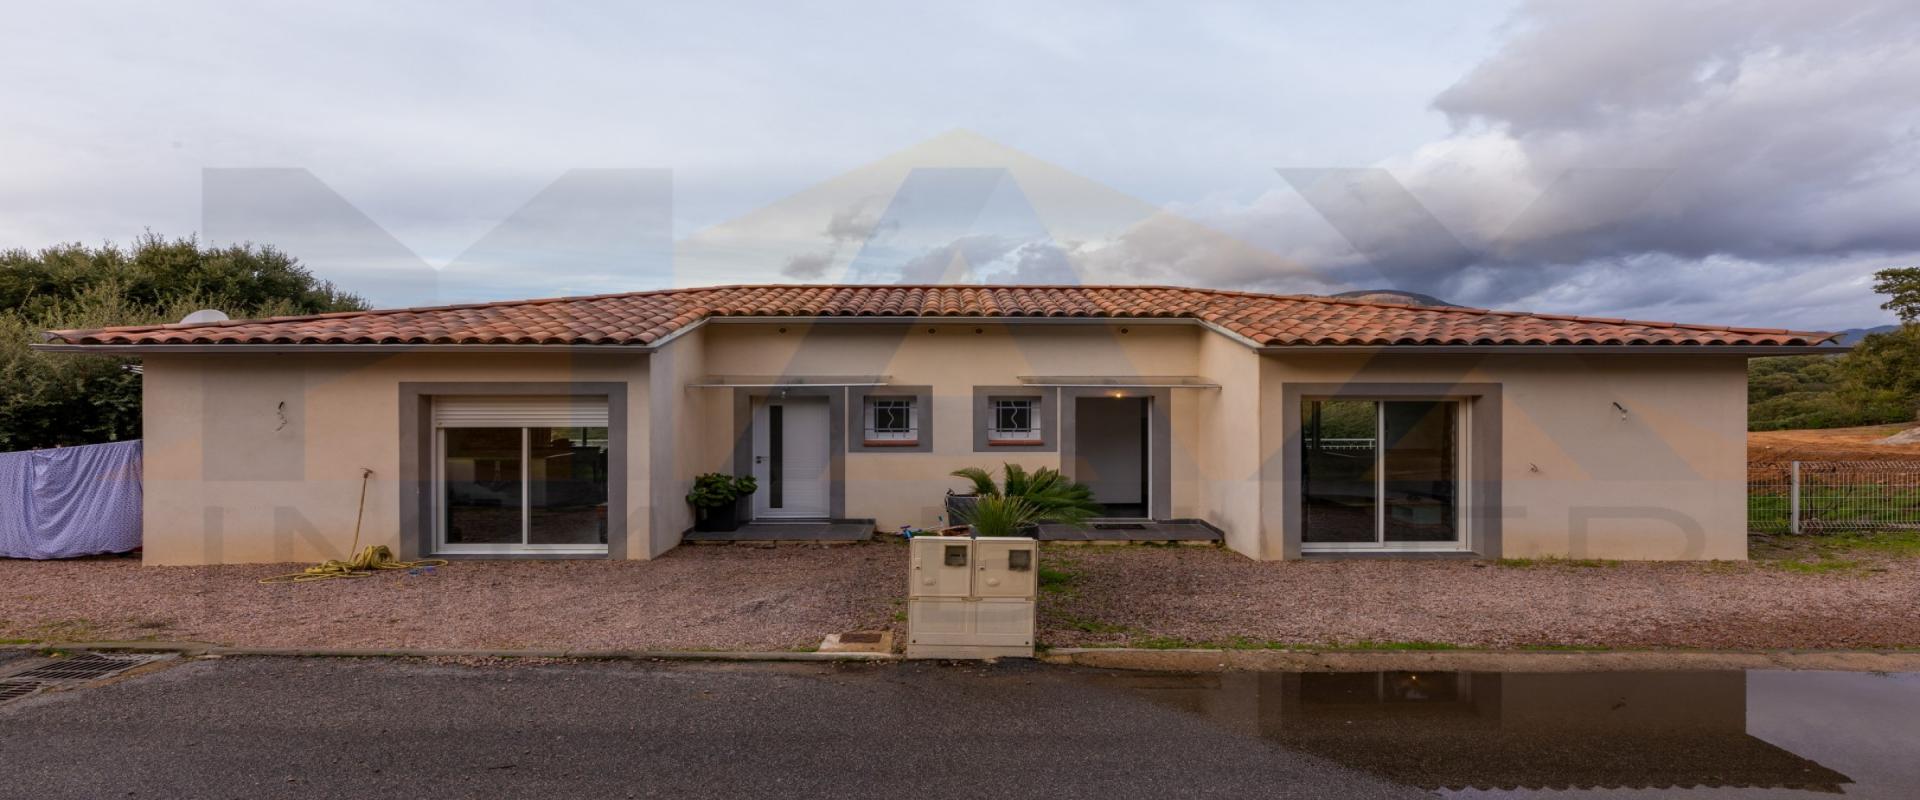 À vendre villa F4 duplex sur la commune d'Afa - Ajaccio